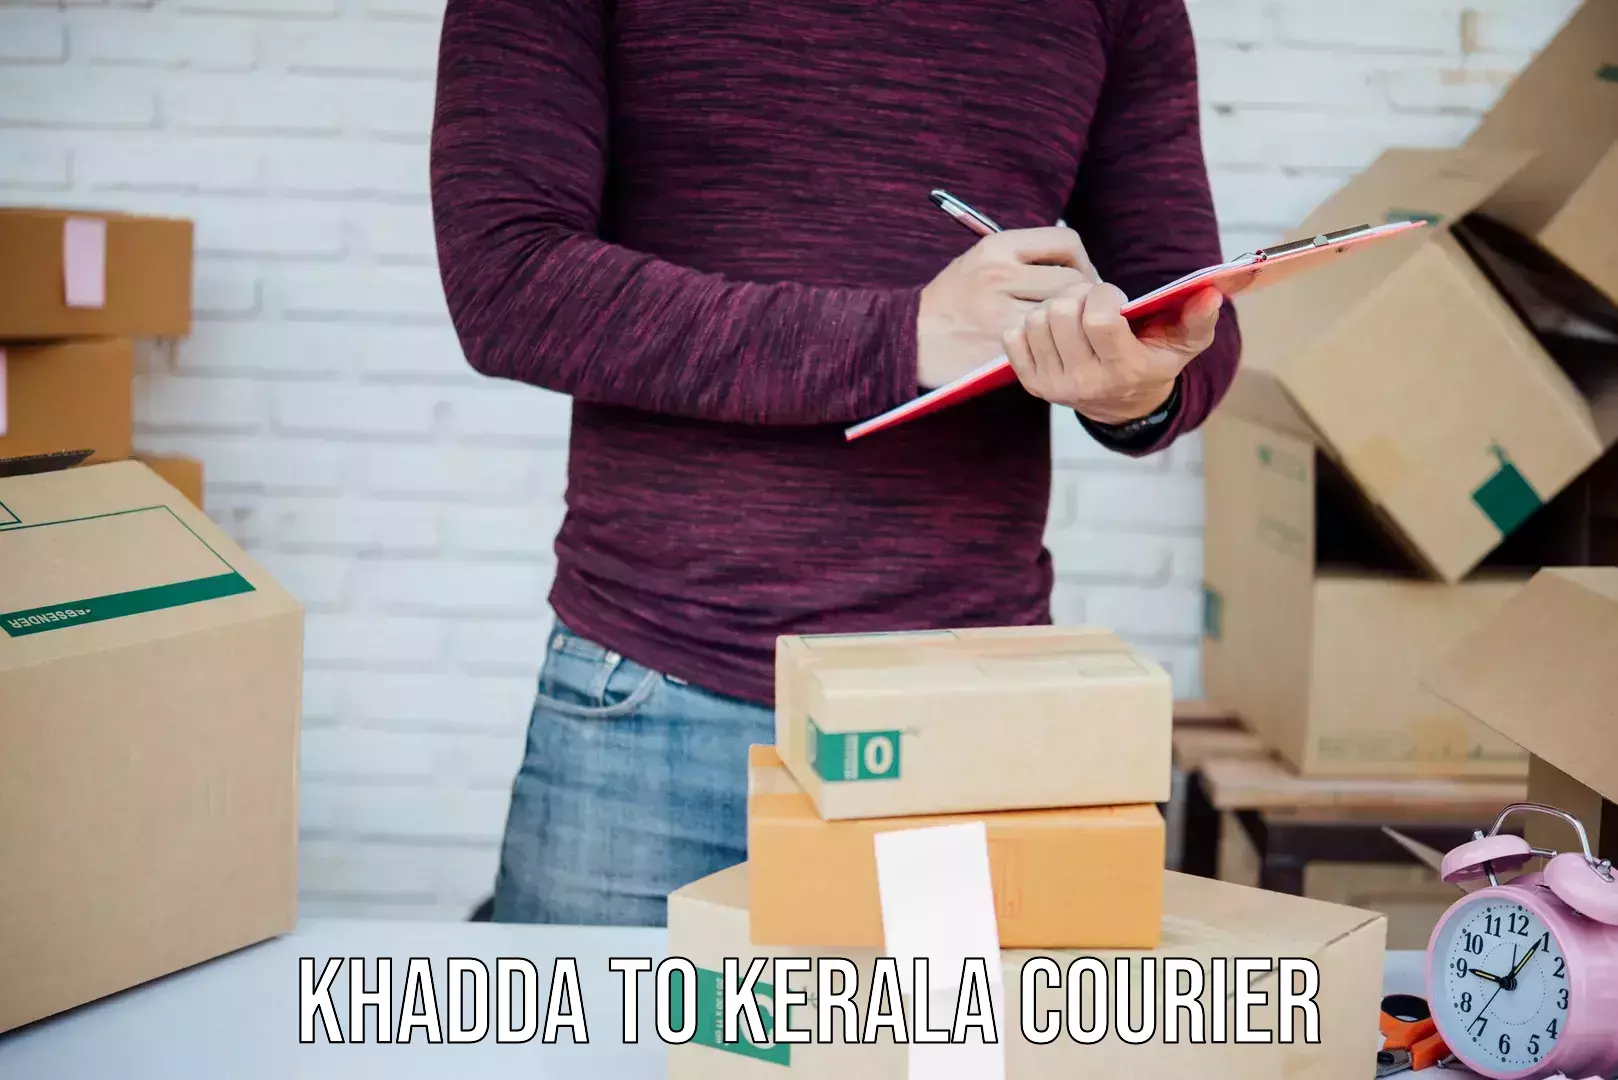 International courier networks Khadda to Kerala